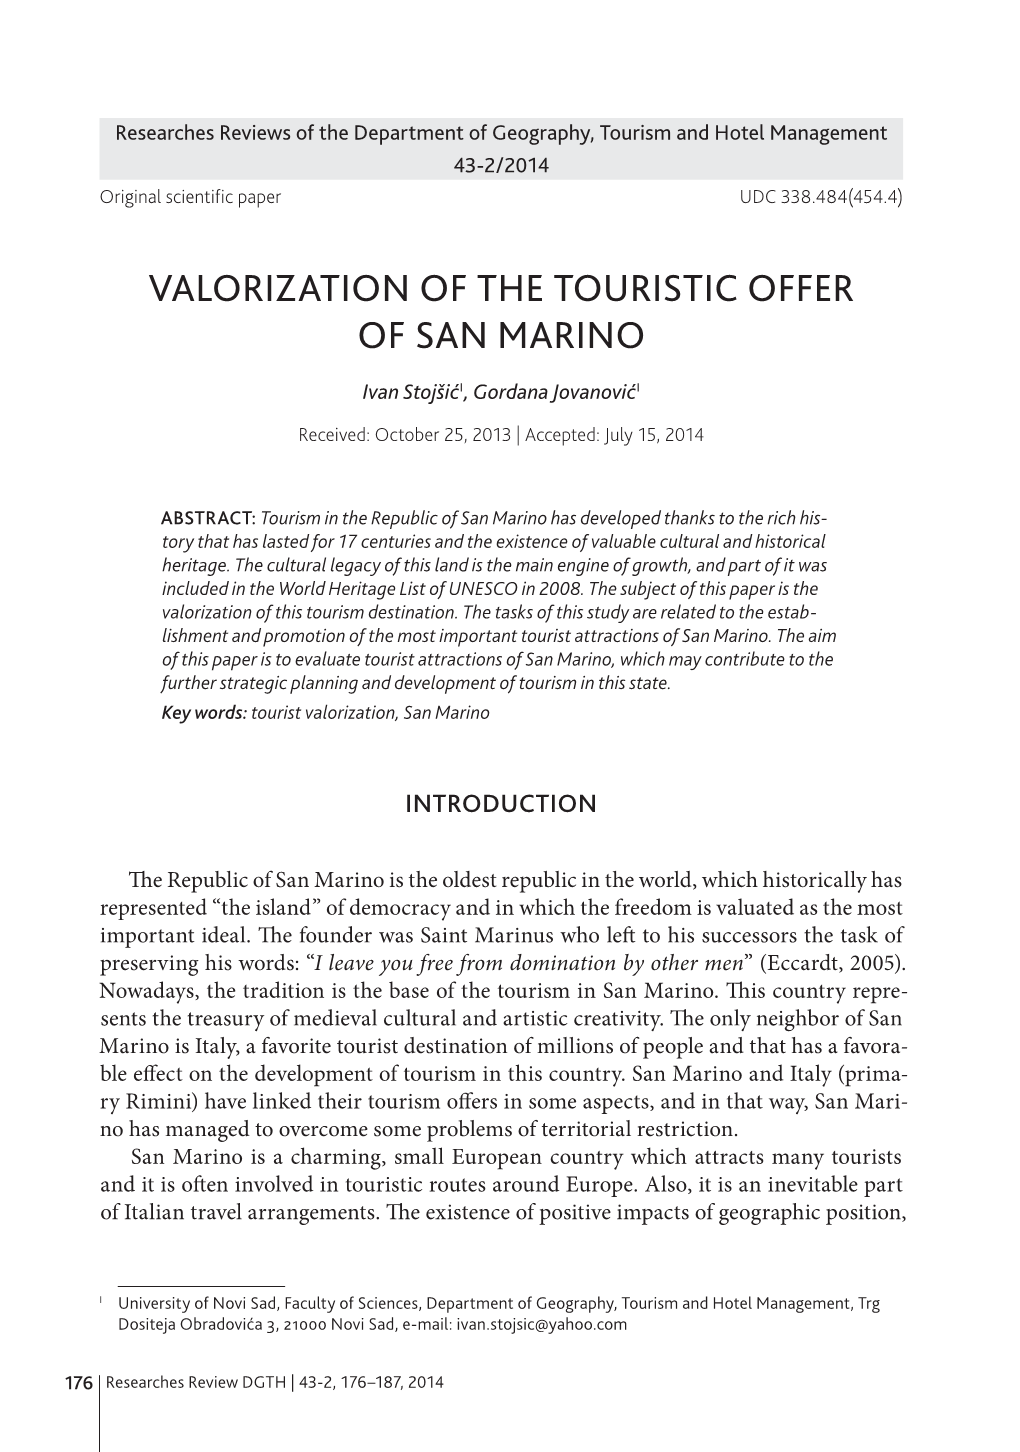 Valorization of the Touristic Offer of San Marino